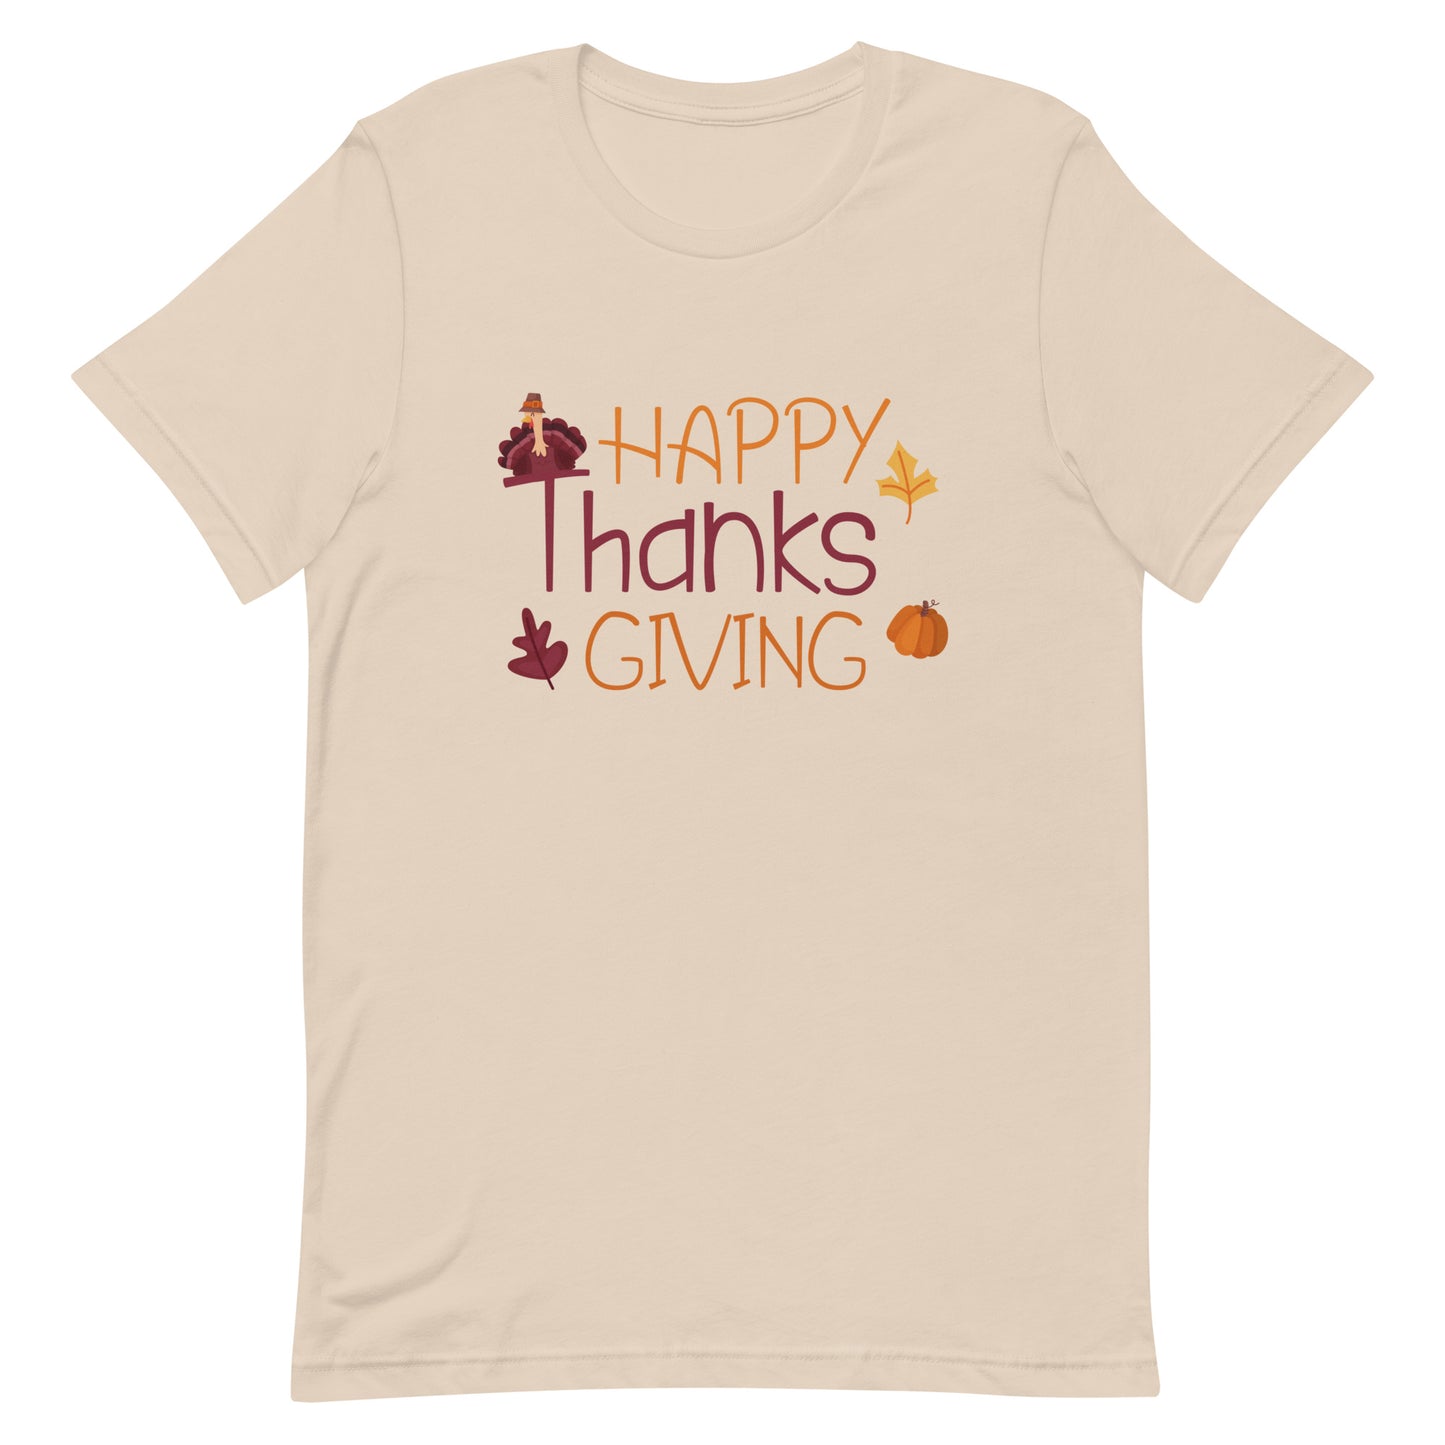 Happy Thanksgiving Day Unisex T-shirt